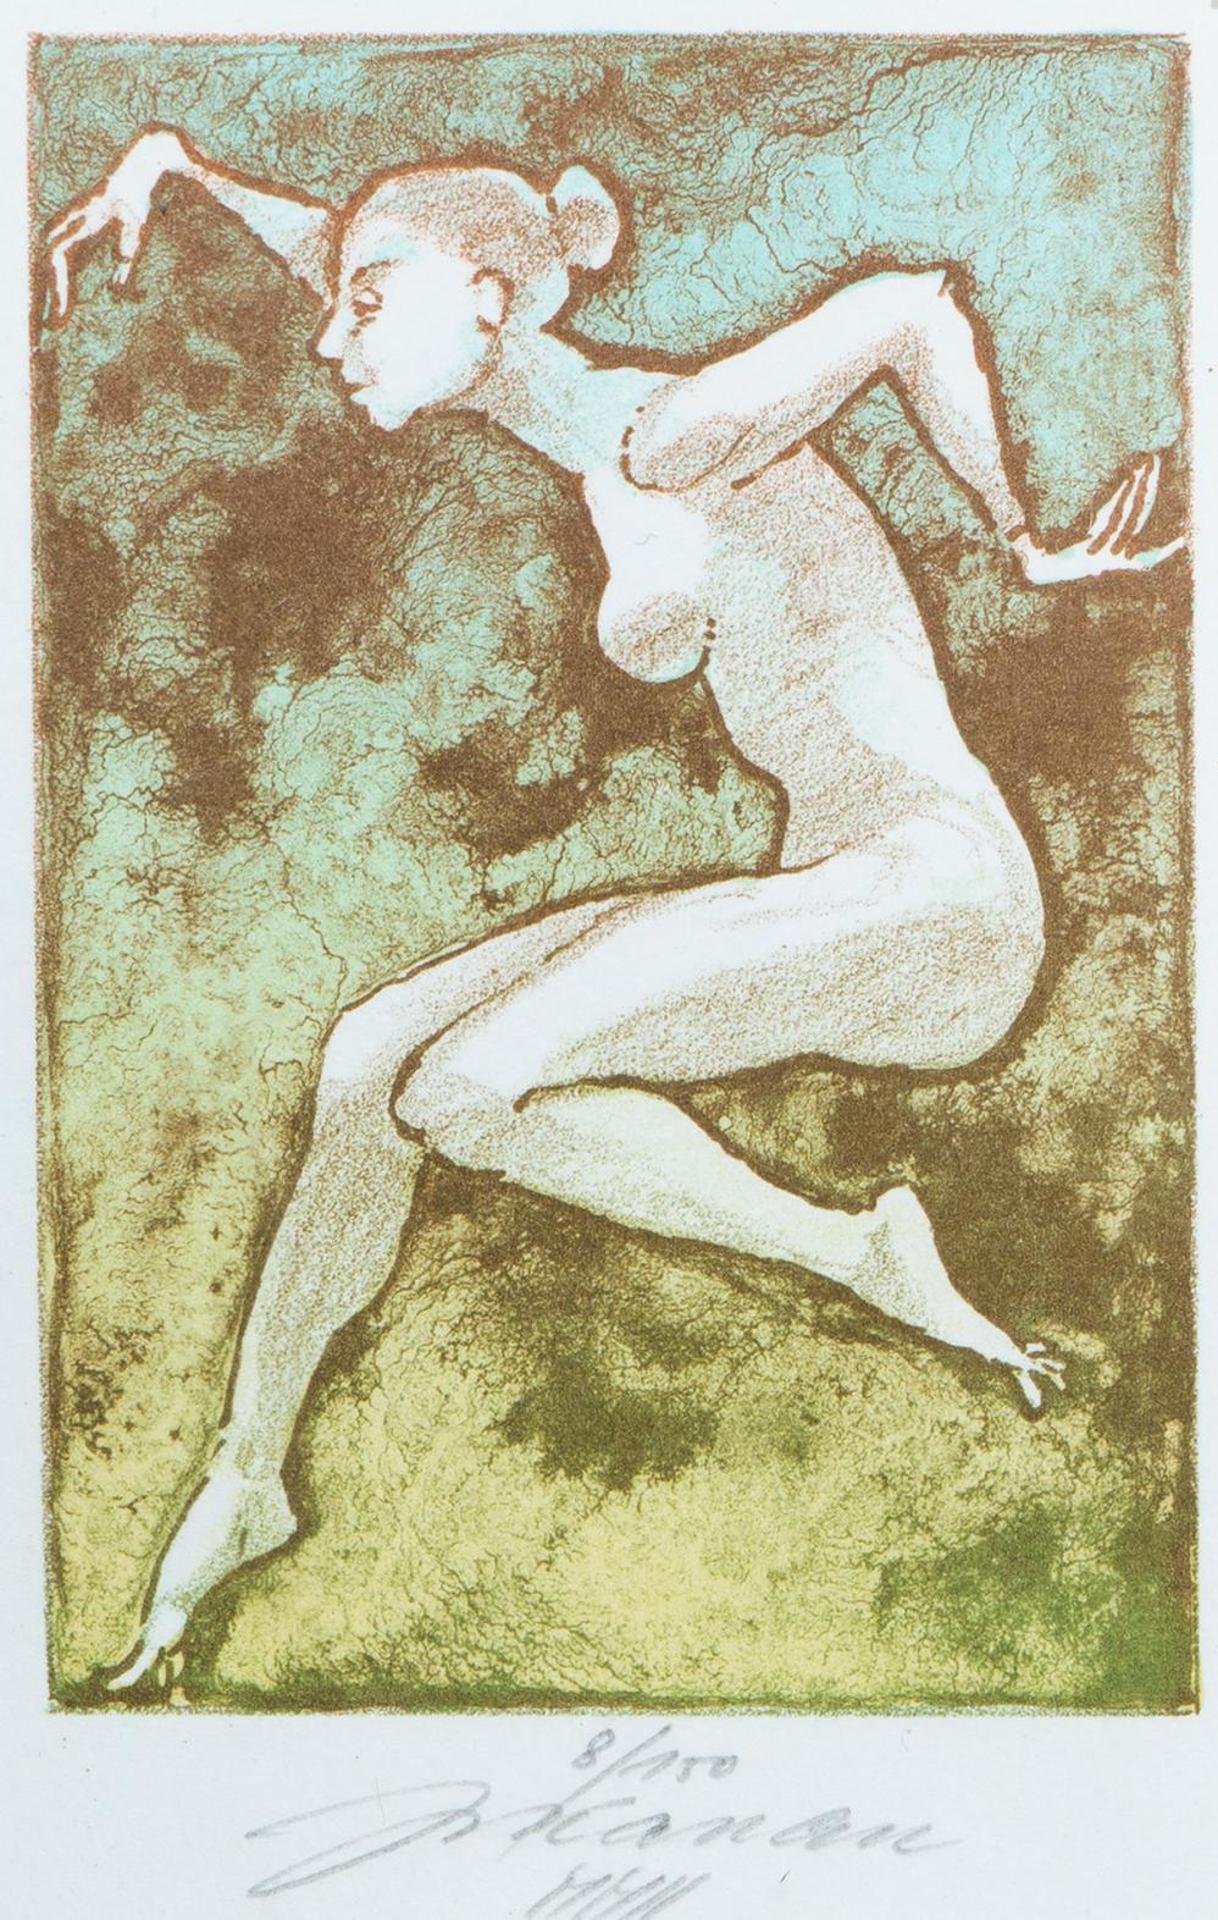 Jan Kavan (1947) - Untitled - Female Nude